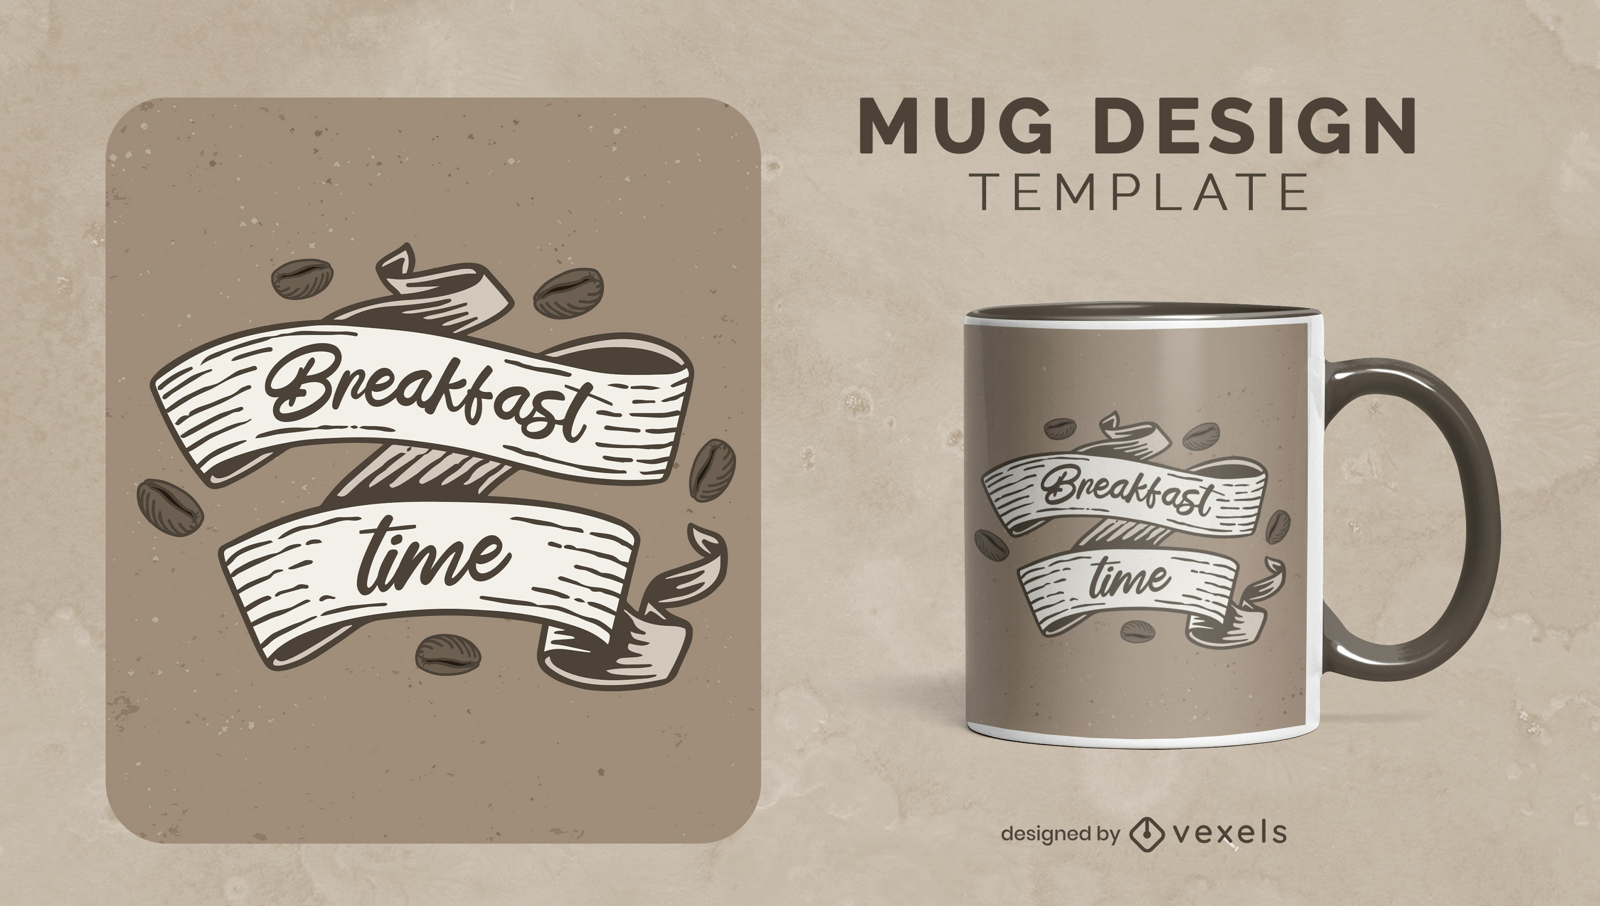 Breakfast time quote mug design